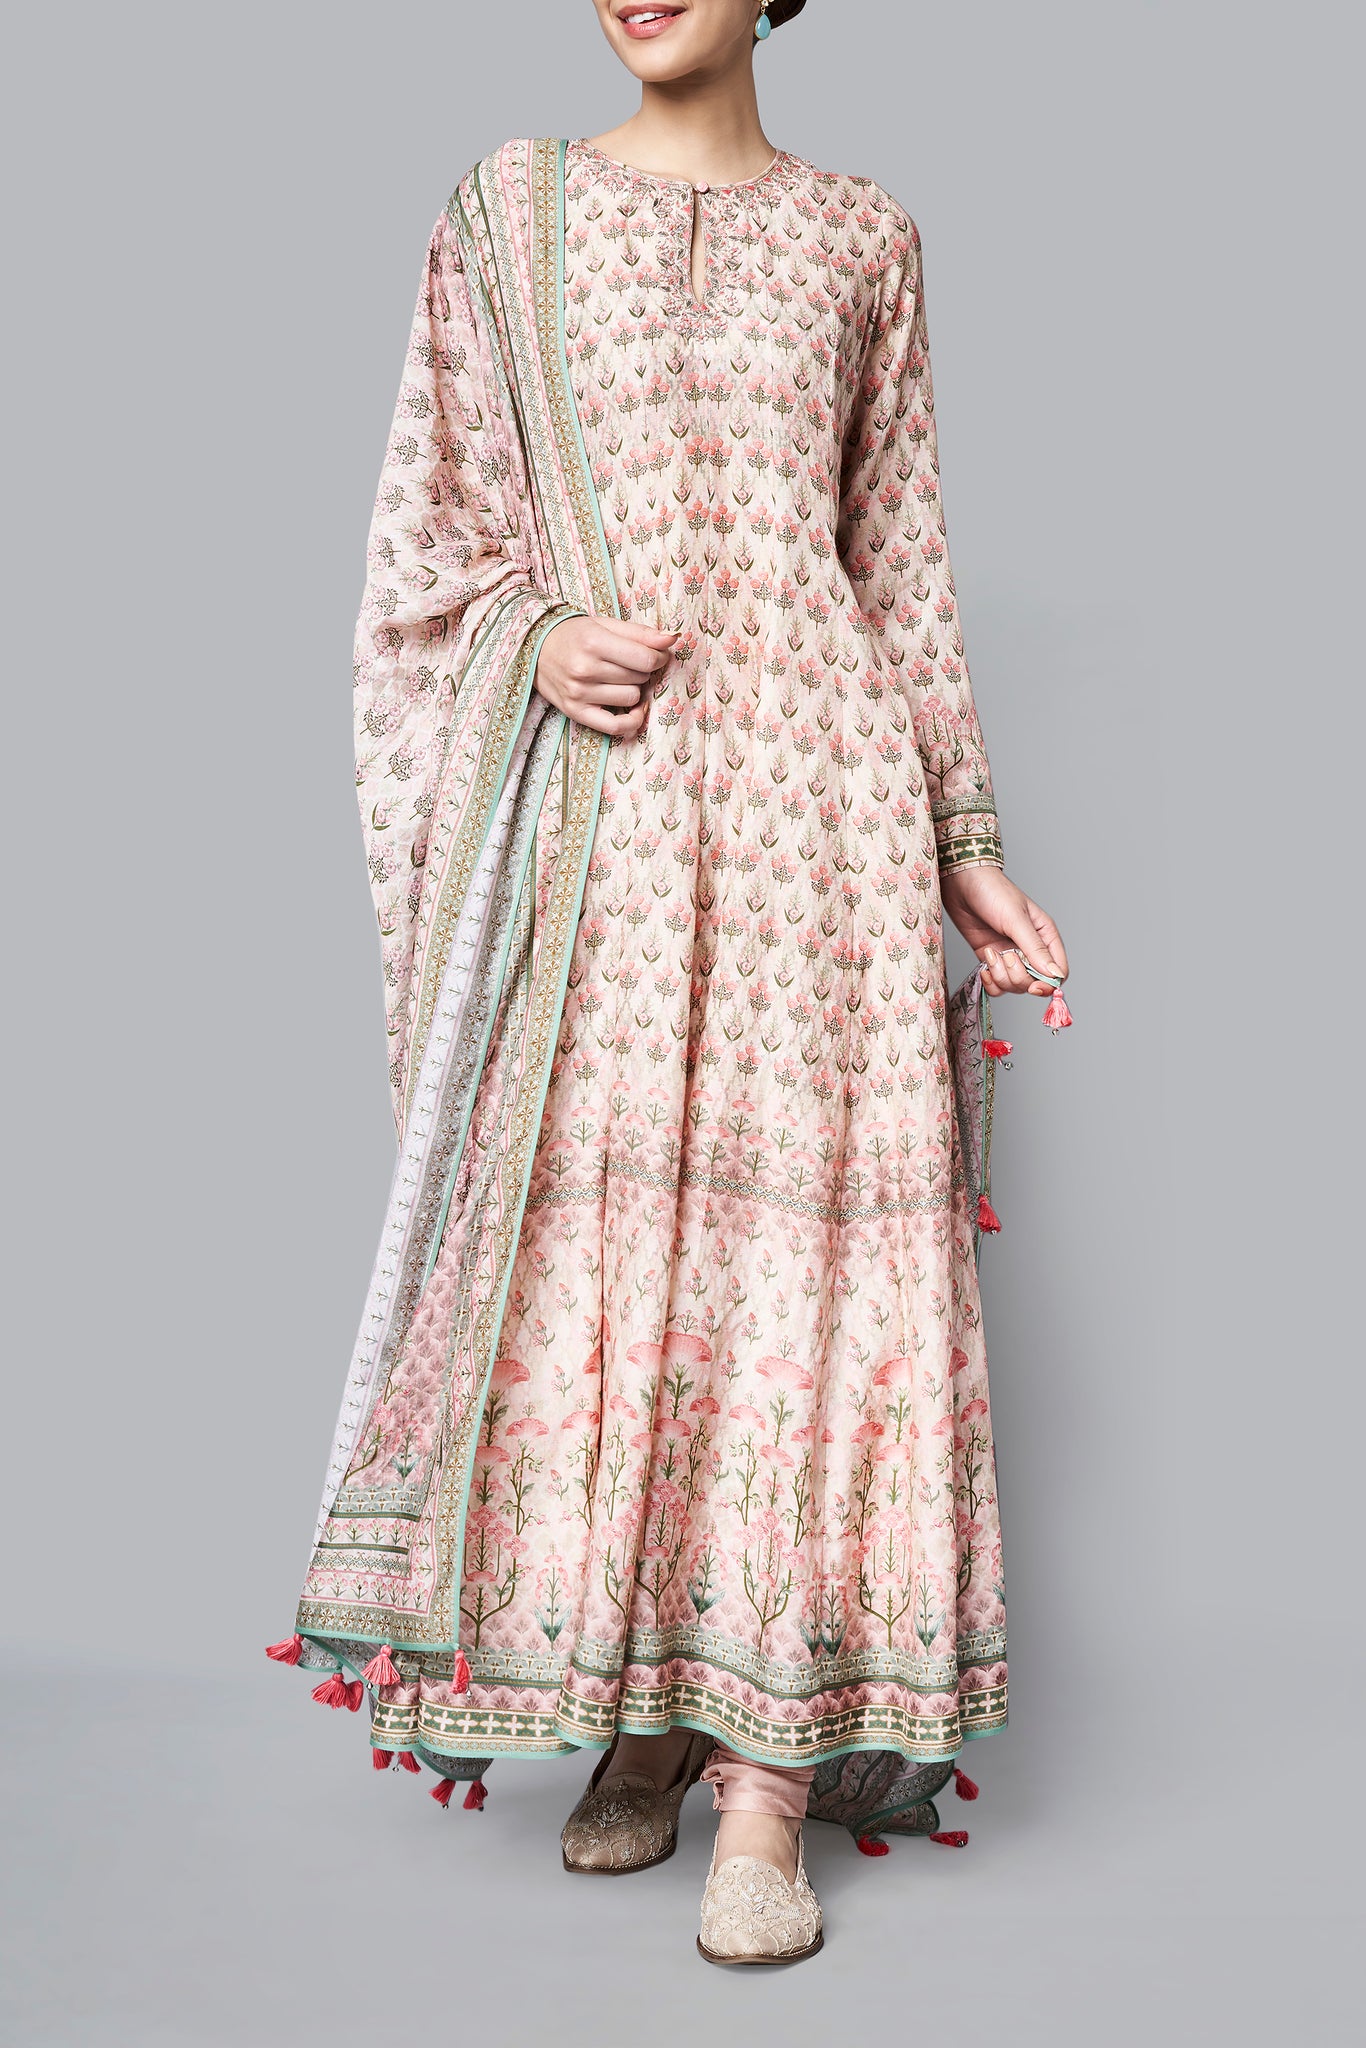 Madhuri Dixit in Anita Dongre's Designer Floor Length Anarkali Suit